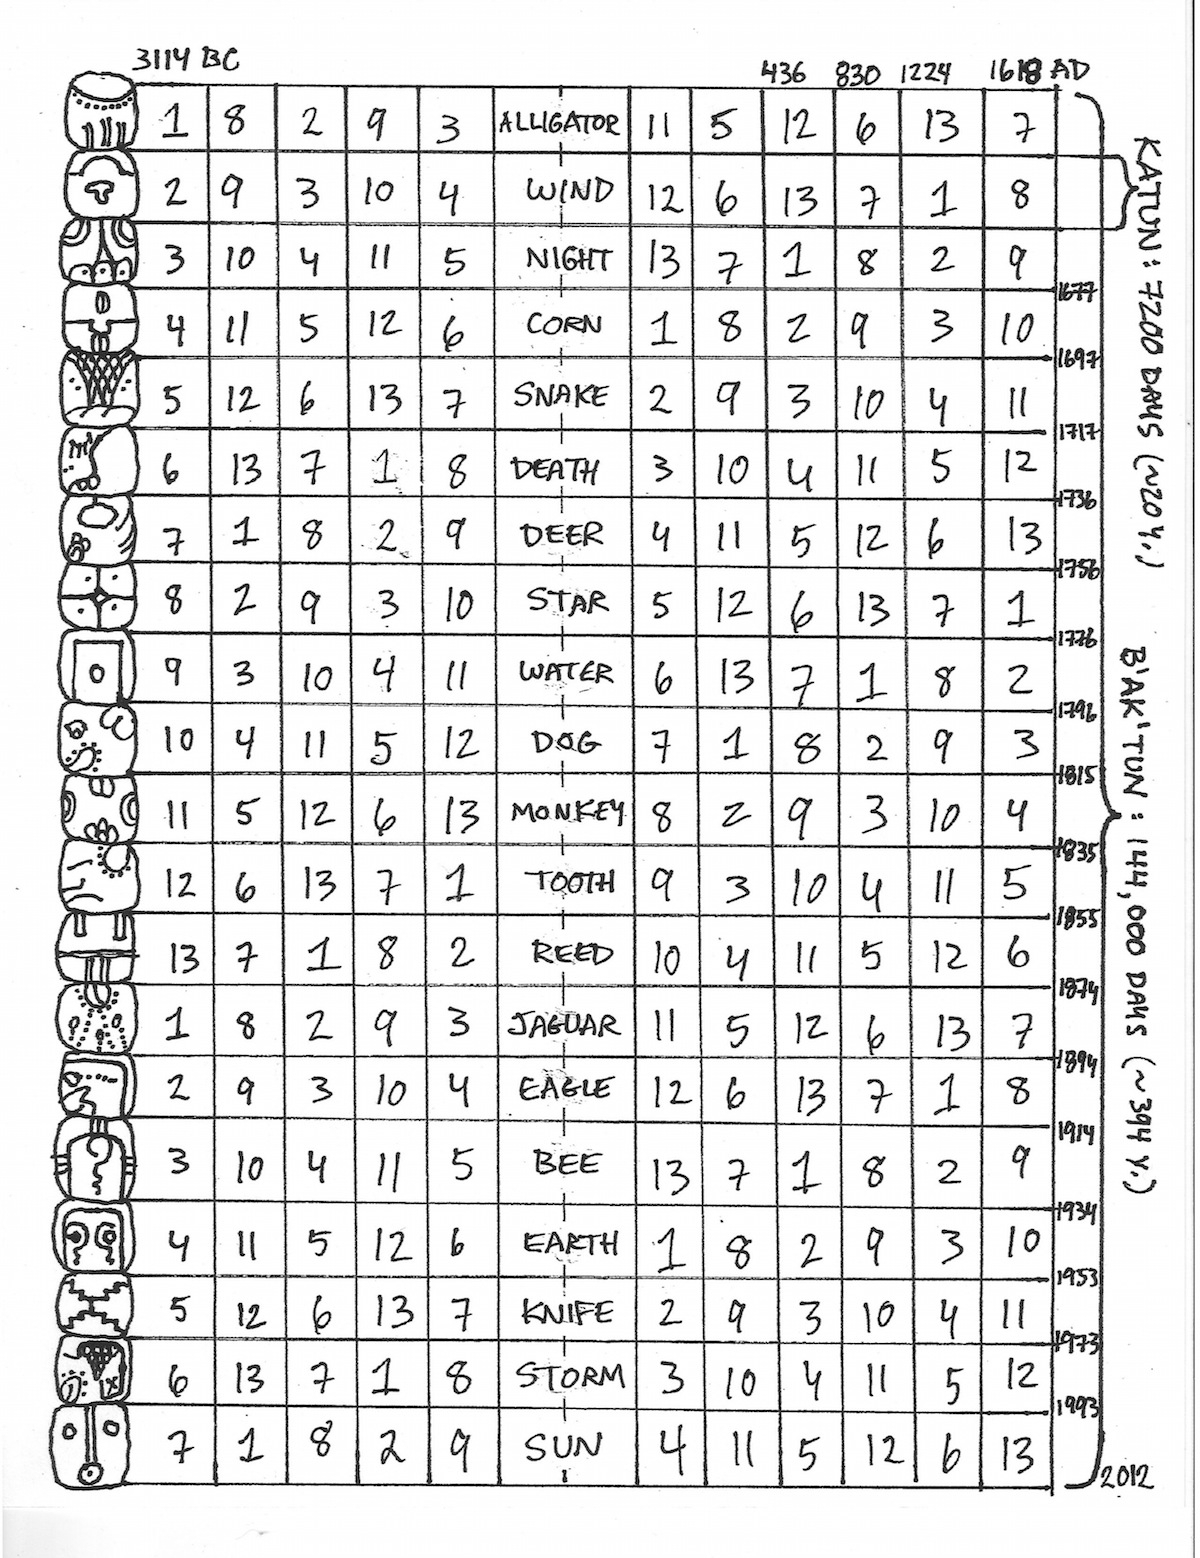 Understand More About The Mayan Calendar - Unlockastrology